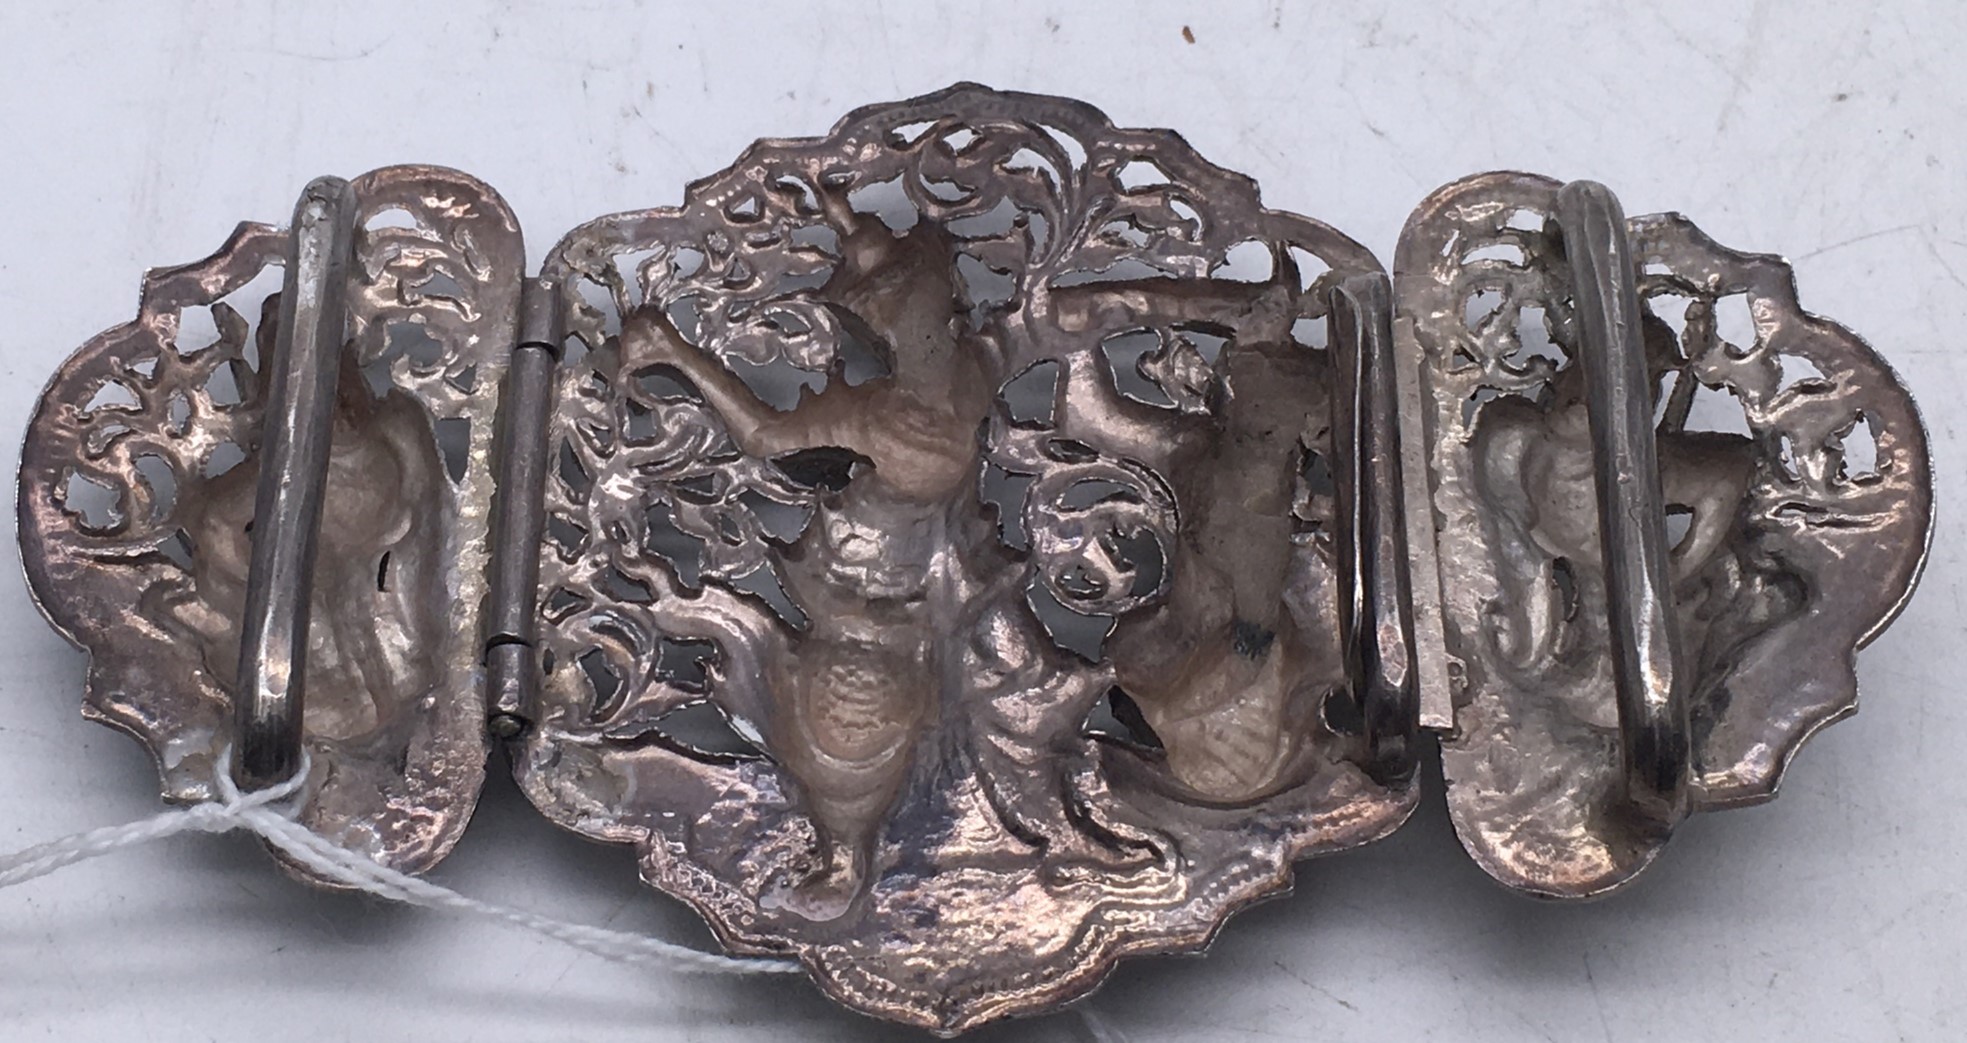 800 silver 3 piece nurses buckle, Asian design 74 grams - Image 2 of 2